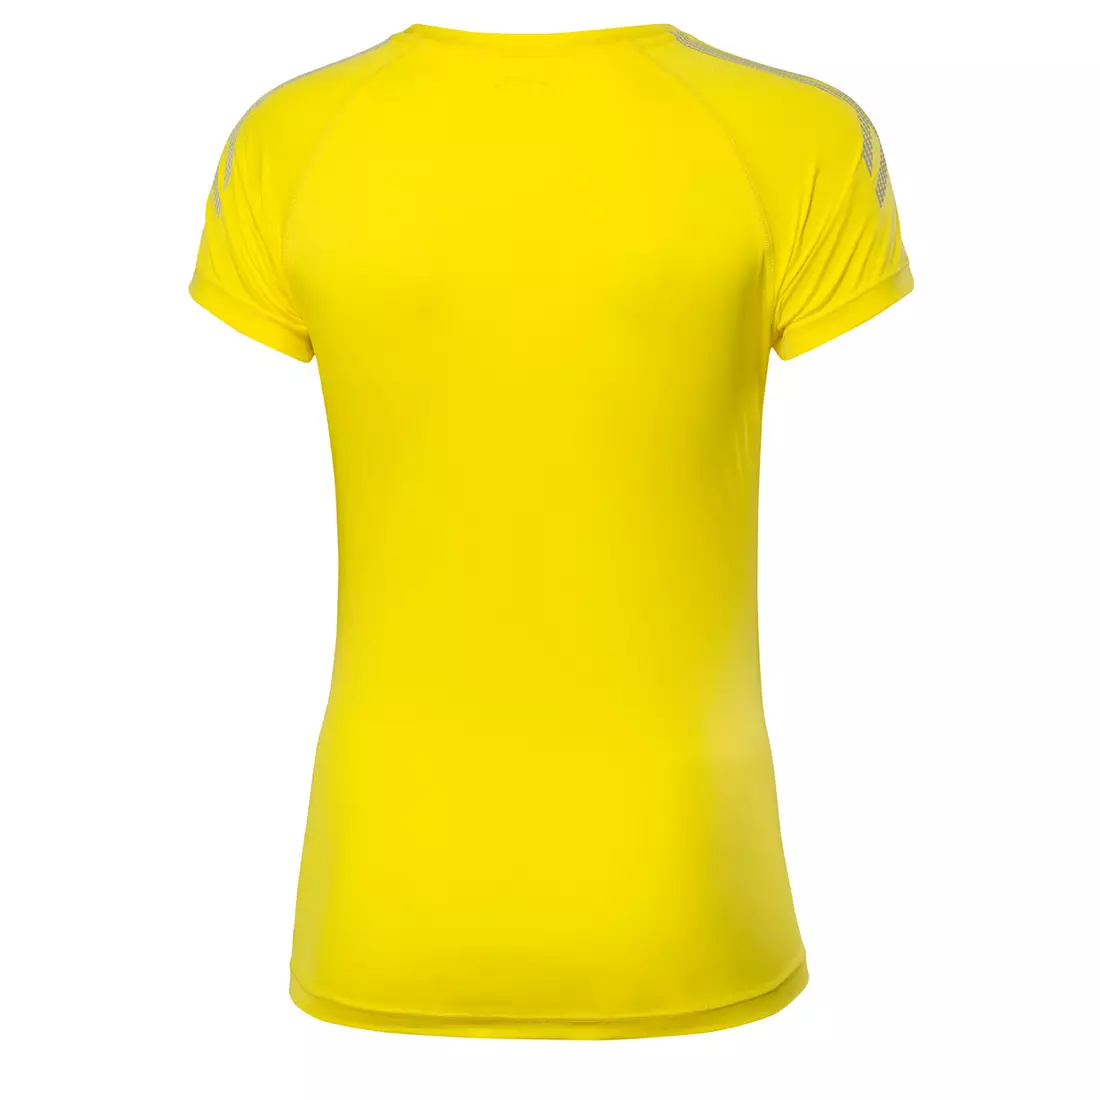 ASICS 339907-0343 TIGER TEE - dámské běžecké tričko, barva: žlutá